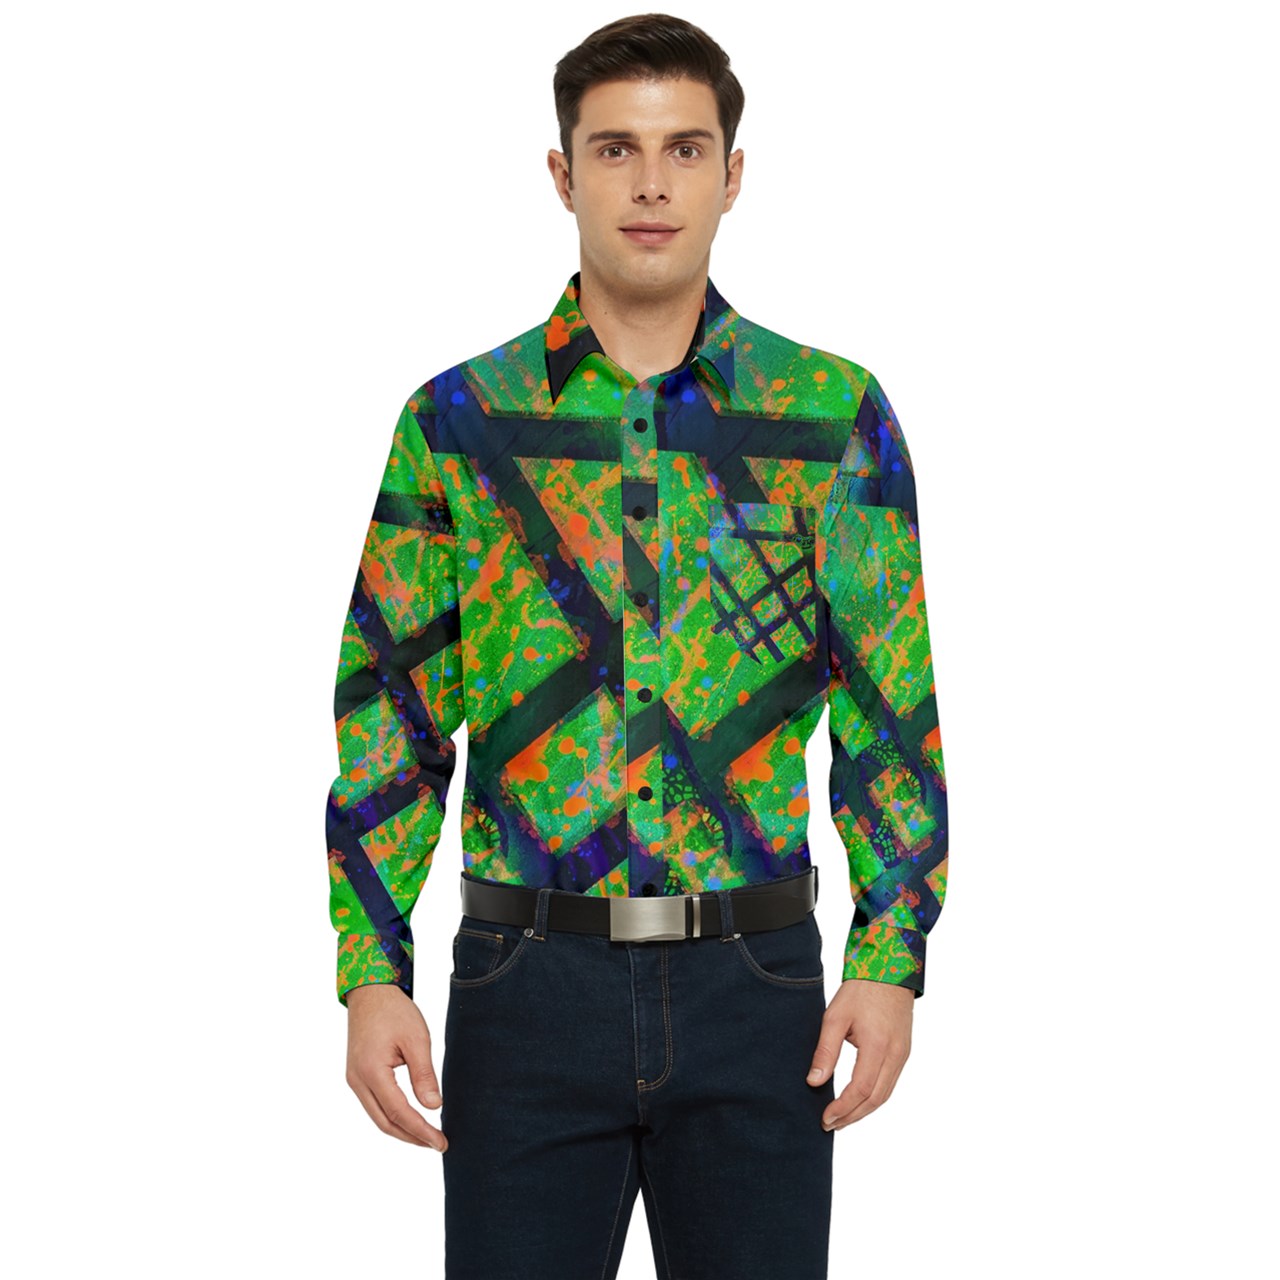 Gavin Scott Long Sleeve Dress Shirt w/Chest Pocket (Masc XS-5XL)